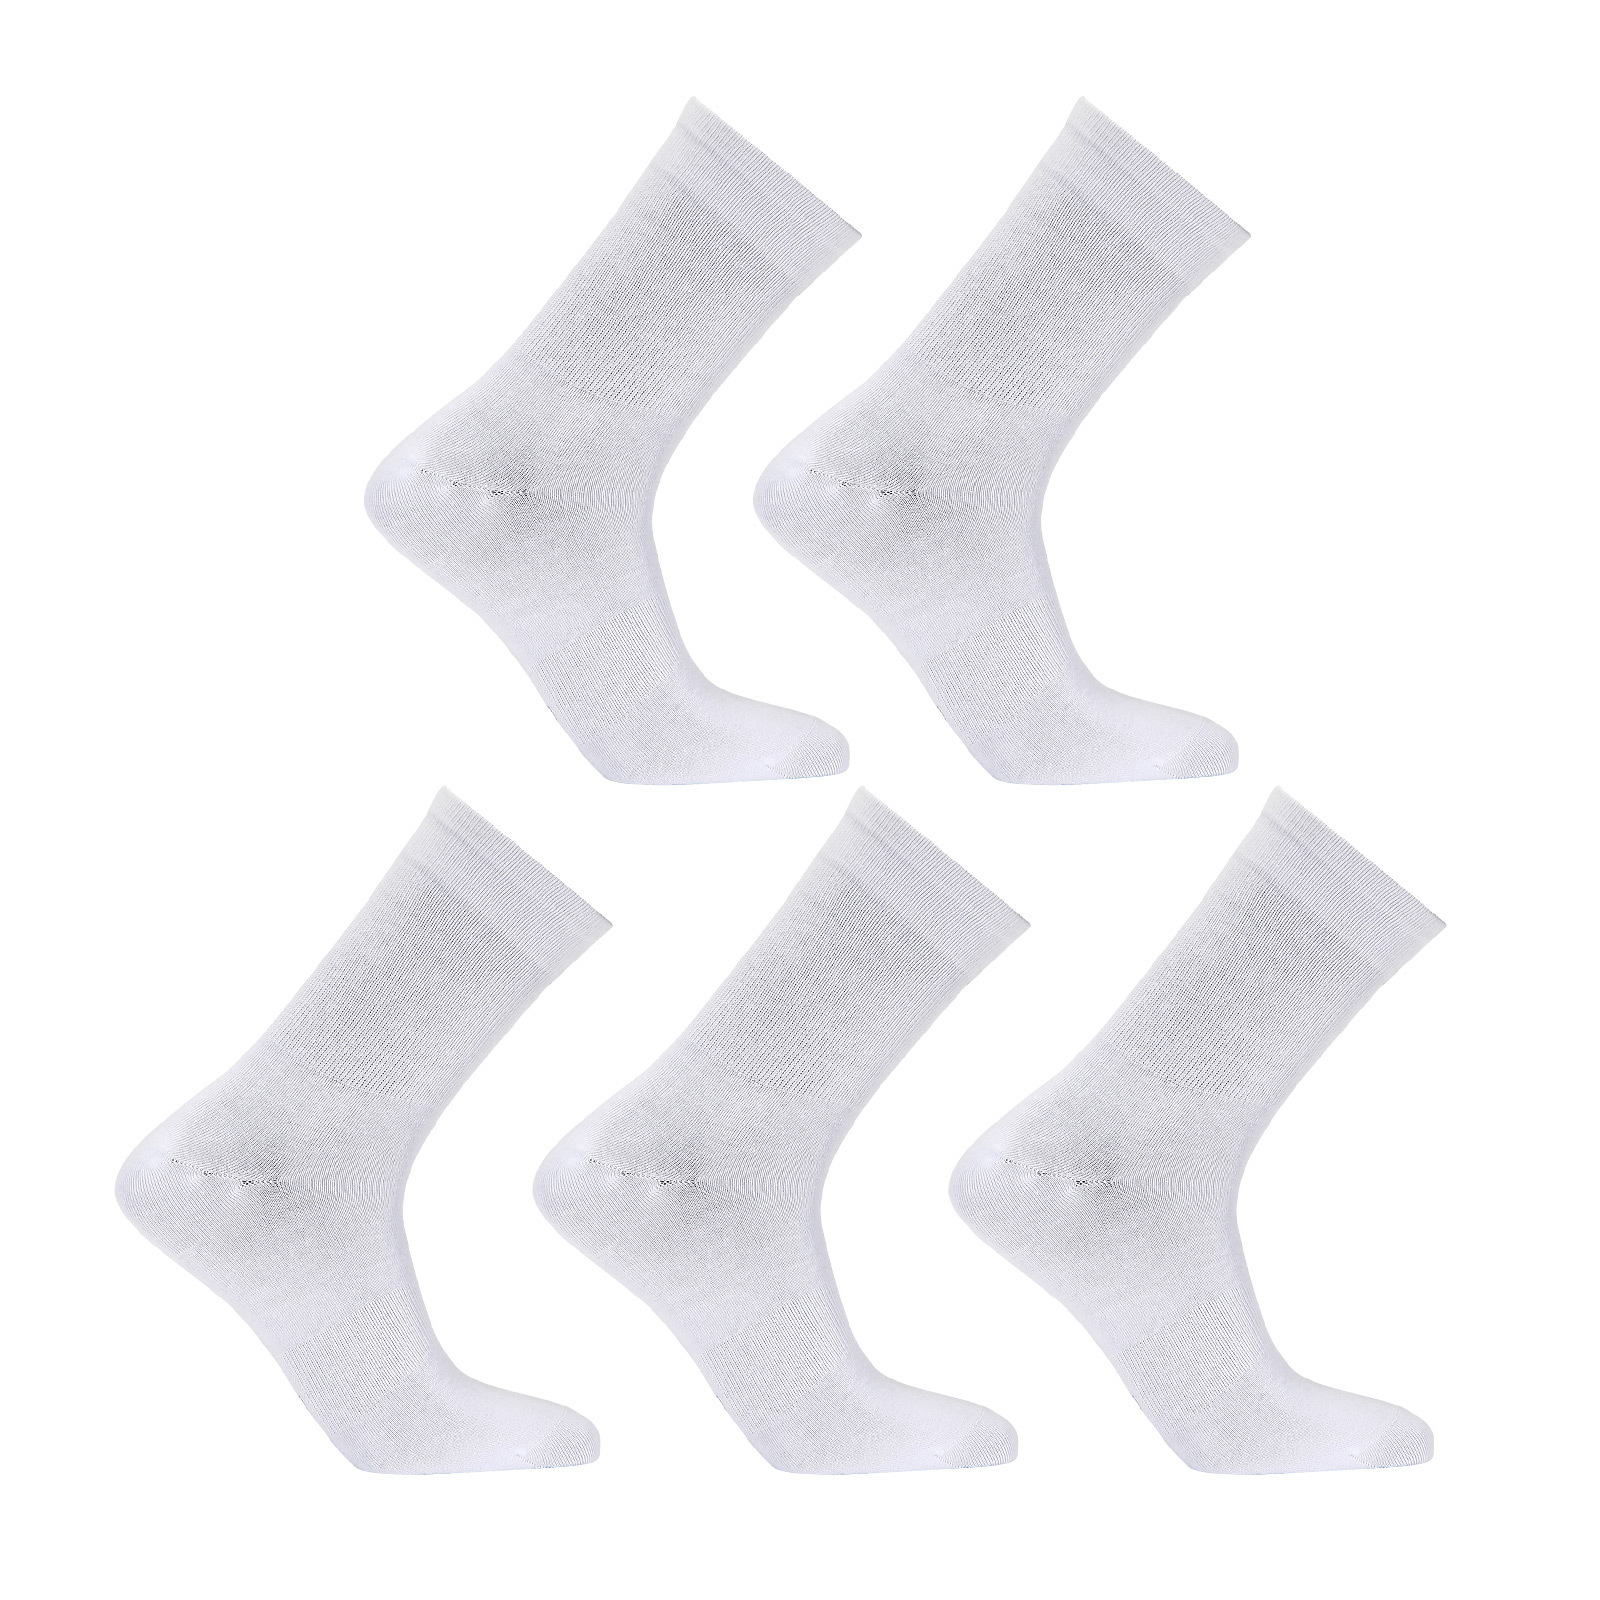 5X Medium 3D Seamless Crew Socks - WHITE